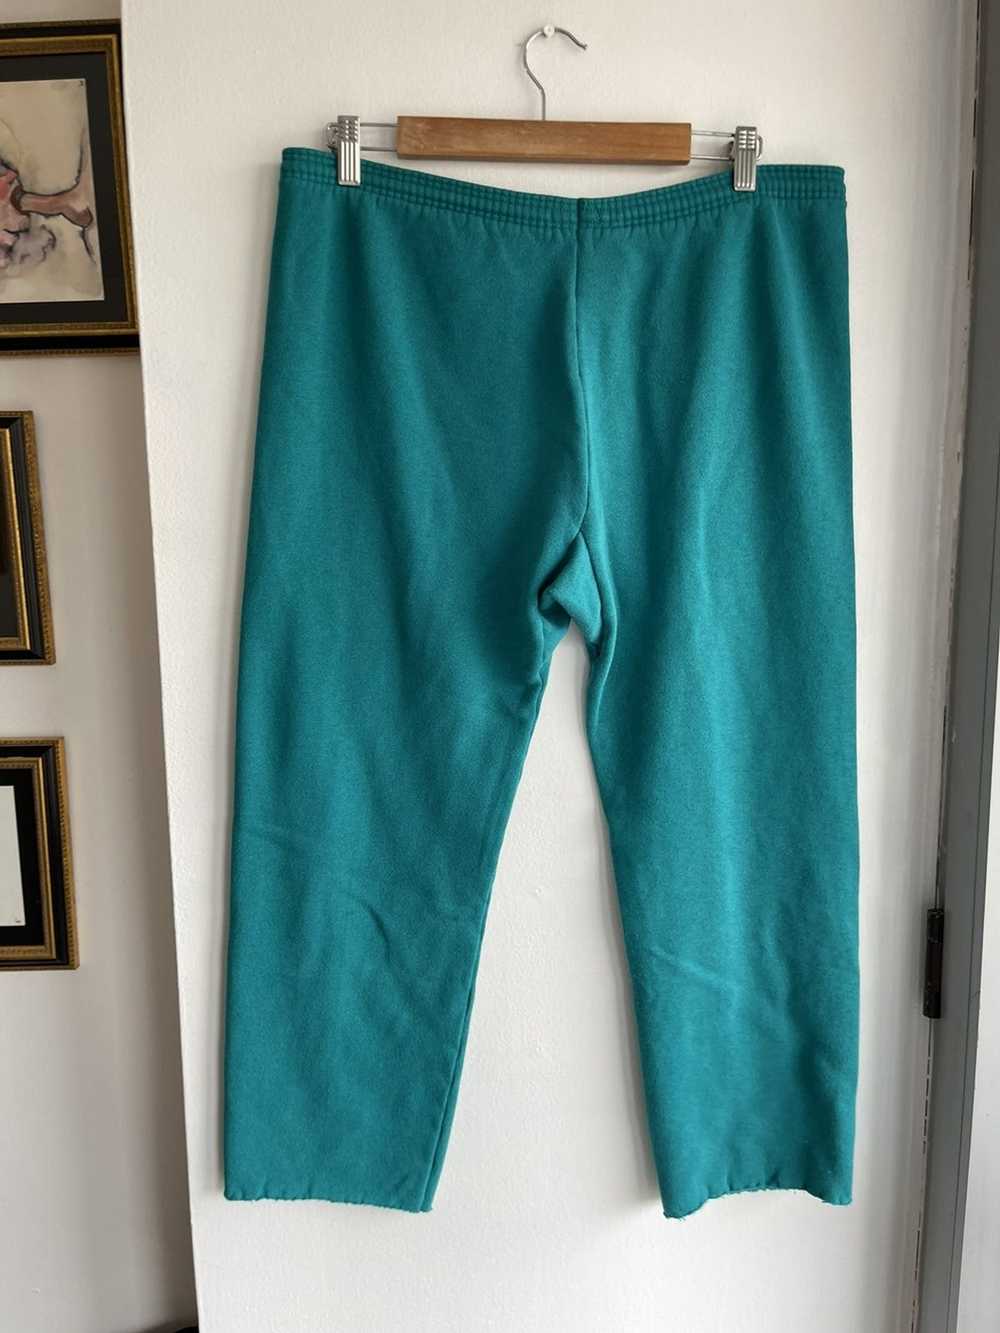 Vintage Vintage Turquoise Sweatpants SOFT & LIGHT - image 6